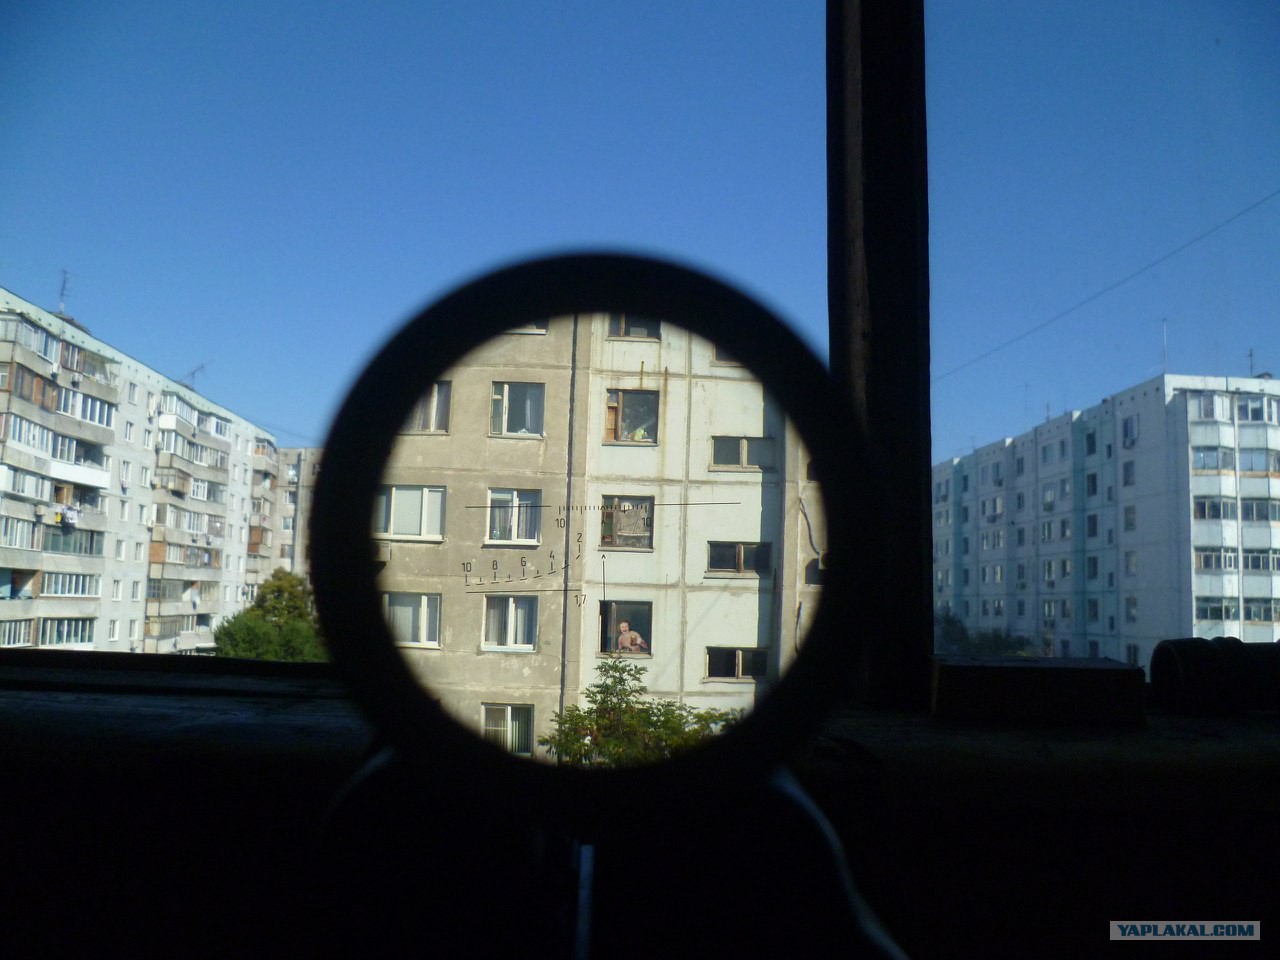 Подглядывание за соседями. Окна через бинокль. Наблюдение в окно. Окно в доме напротив. Бинокль подгляд окна.